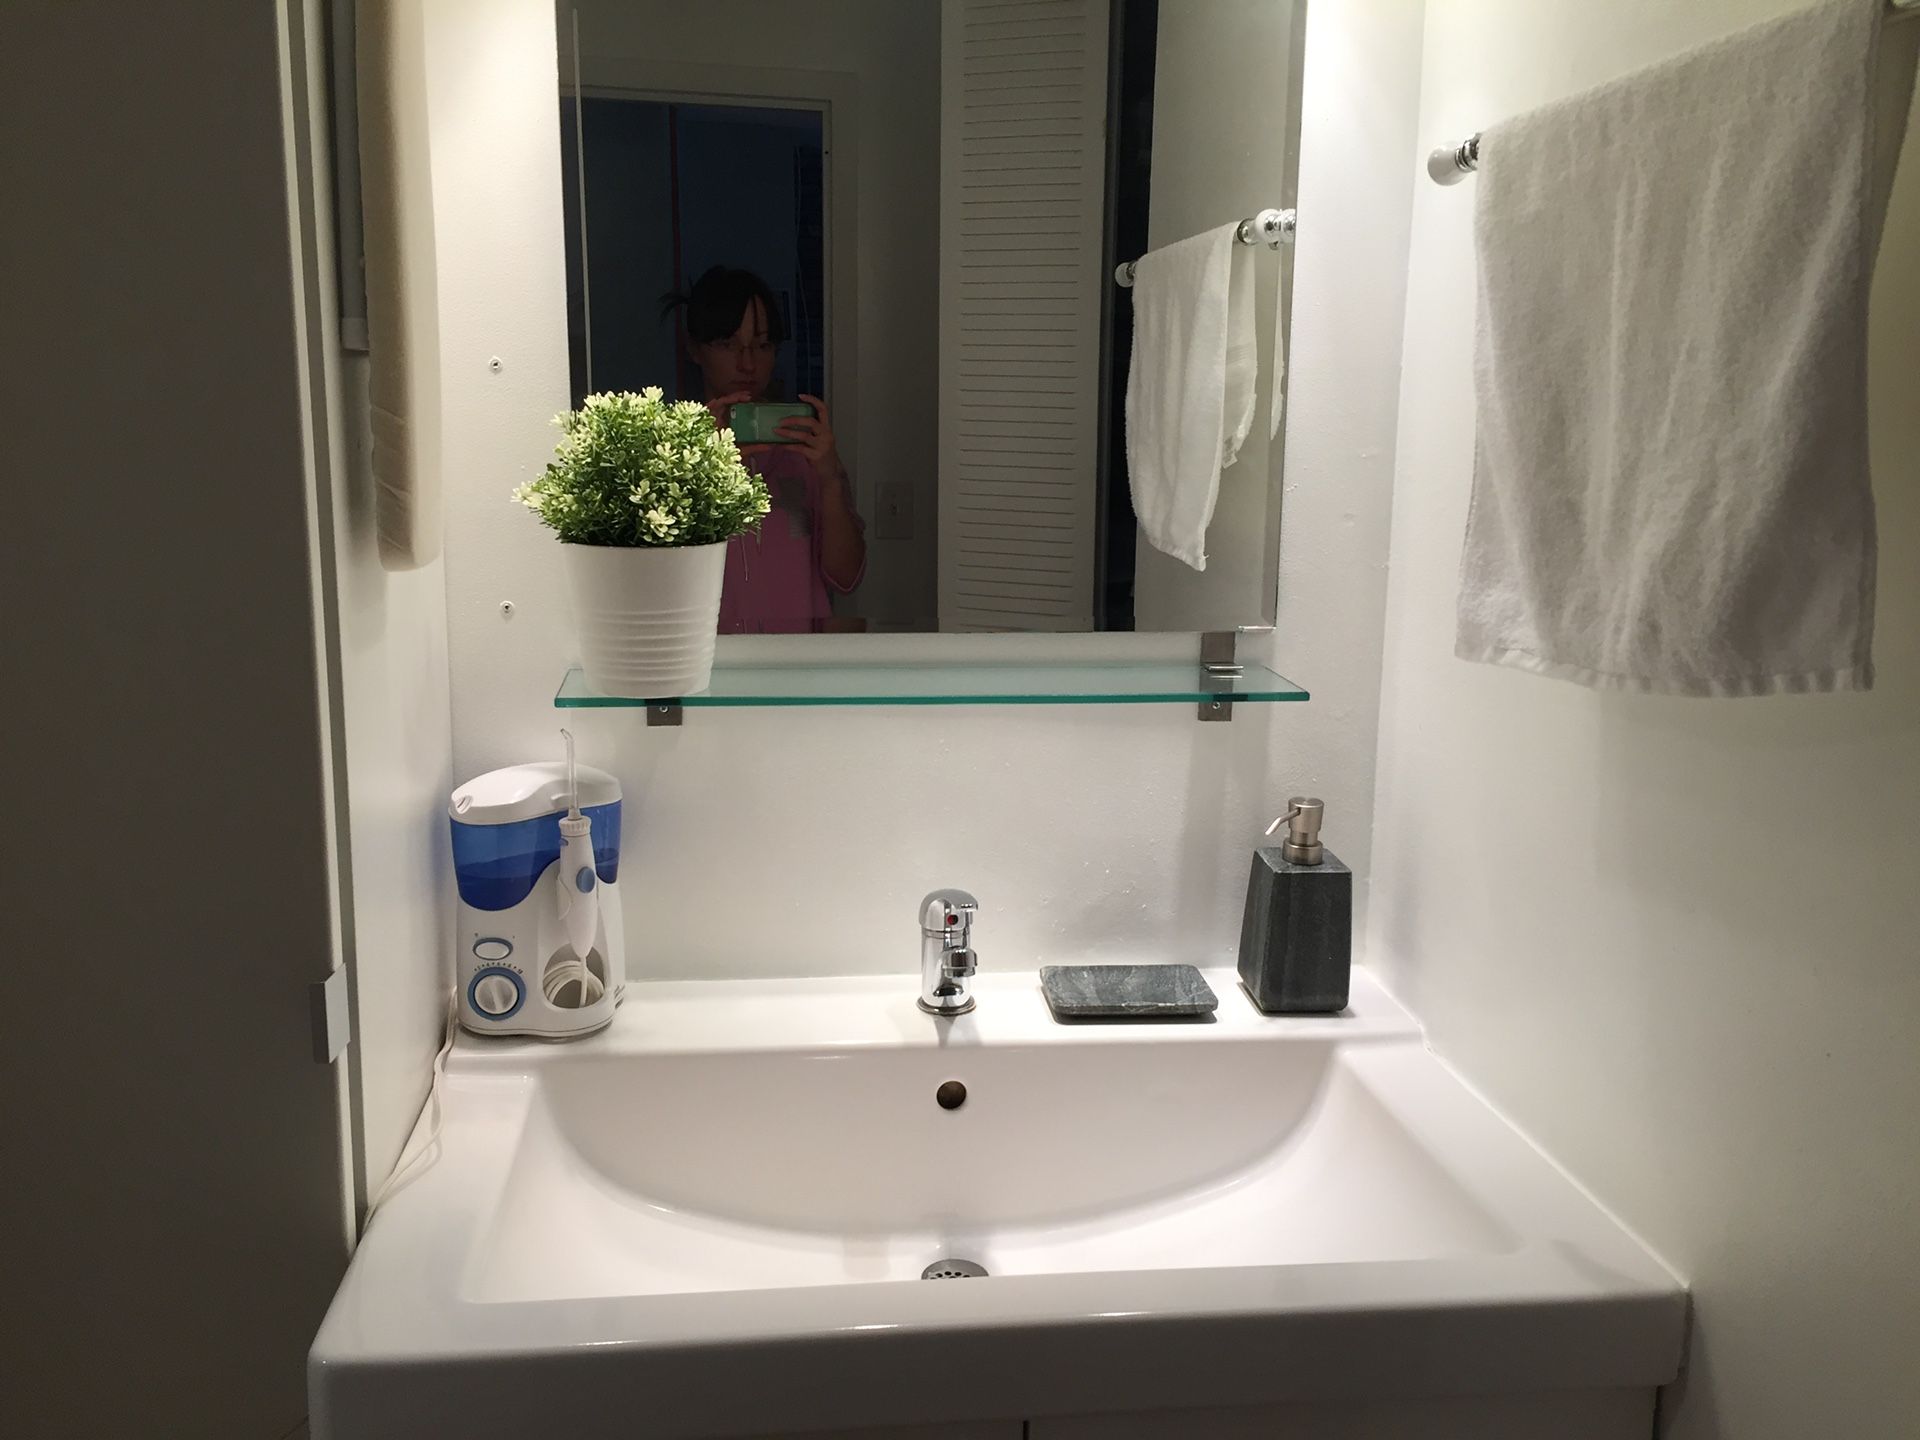 Bathroom mirror with glass shelf